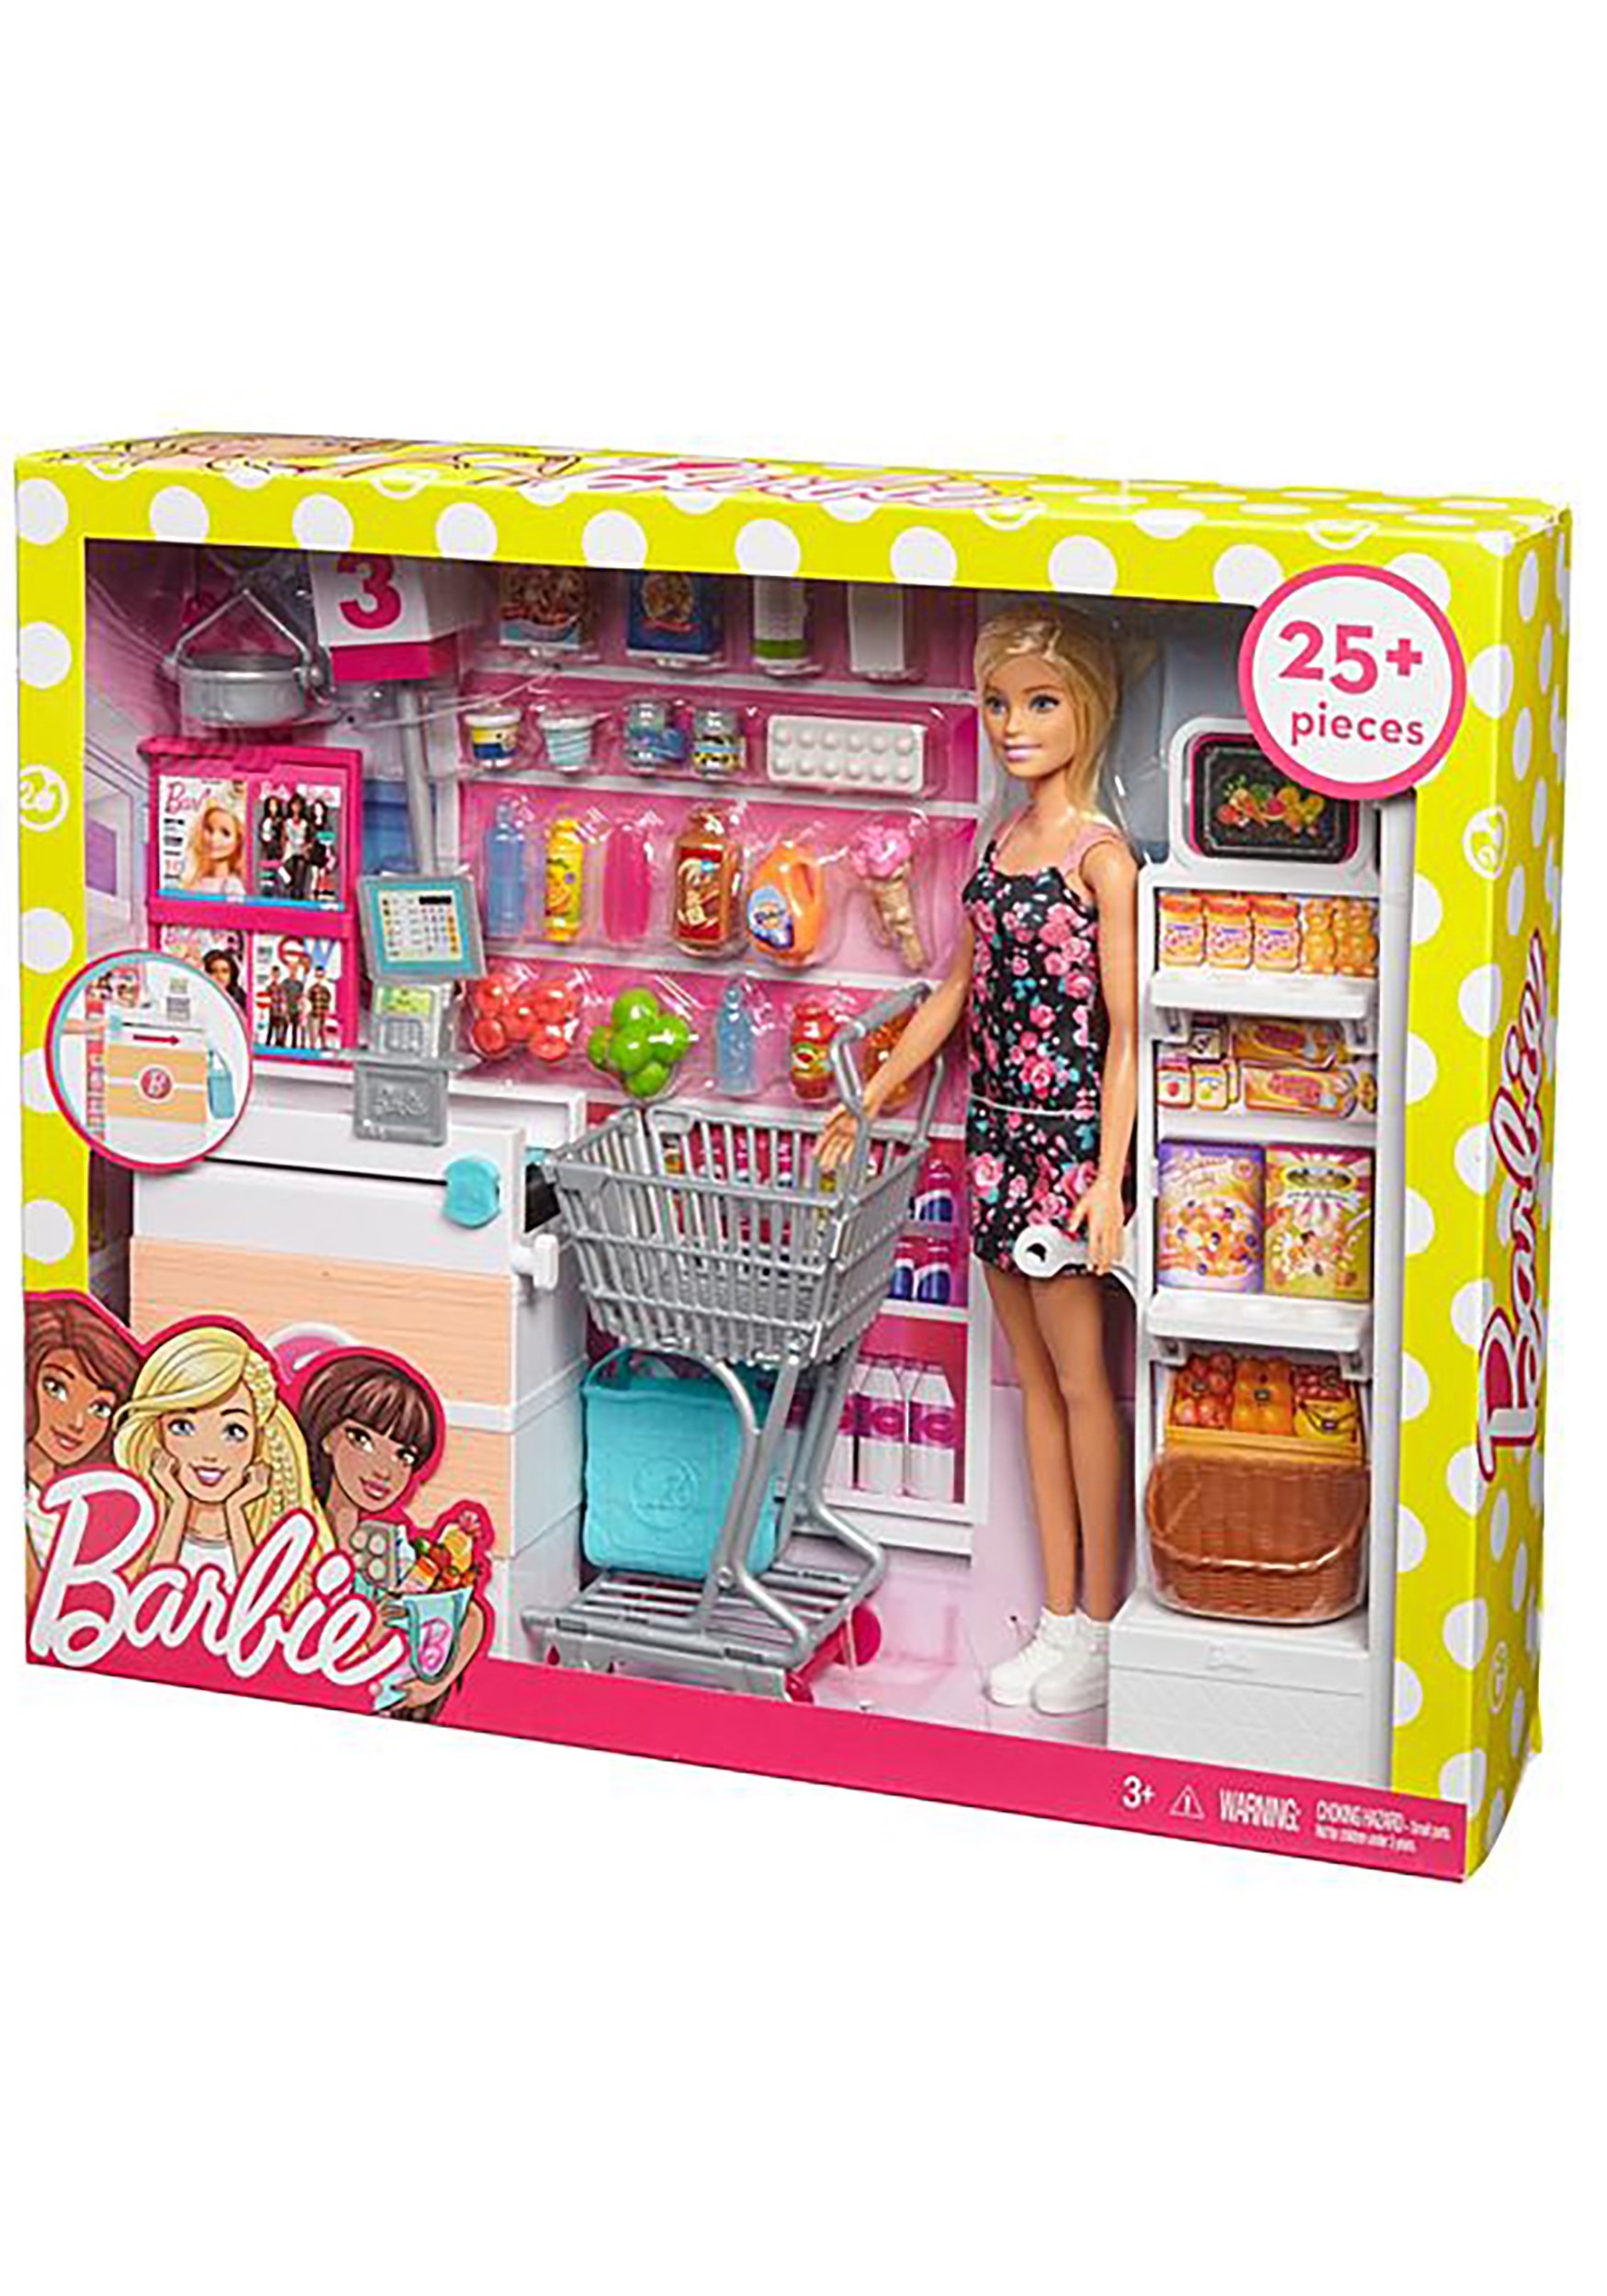 barbie doll playing set